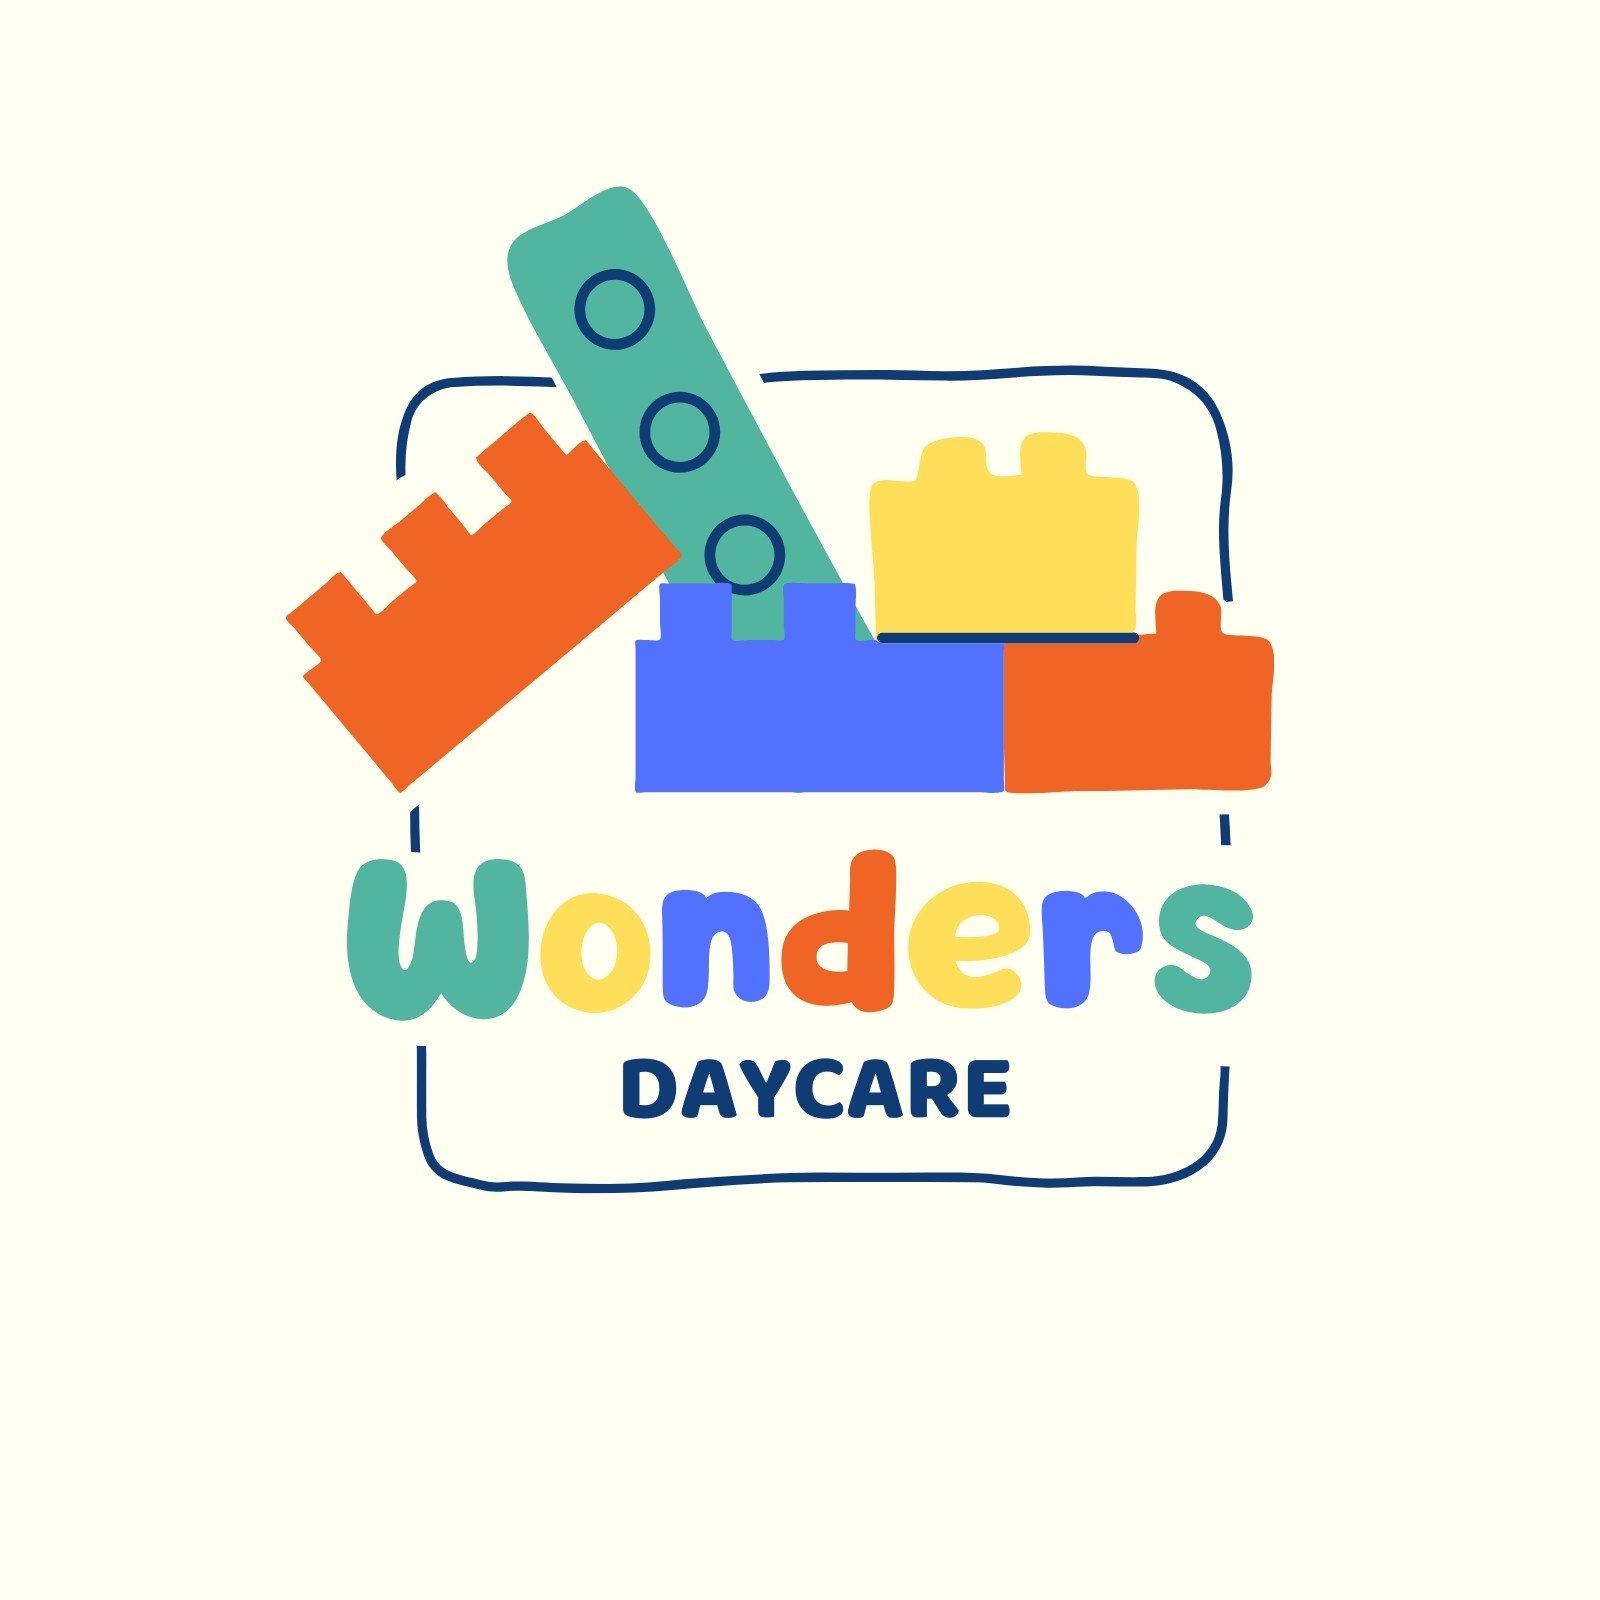 daycare logo